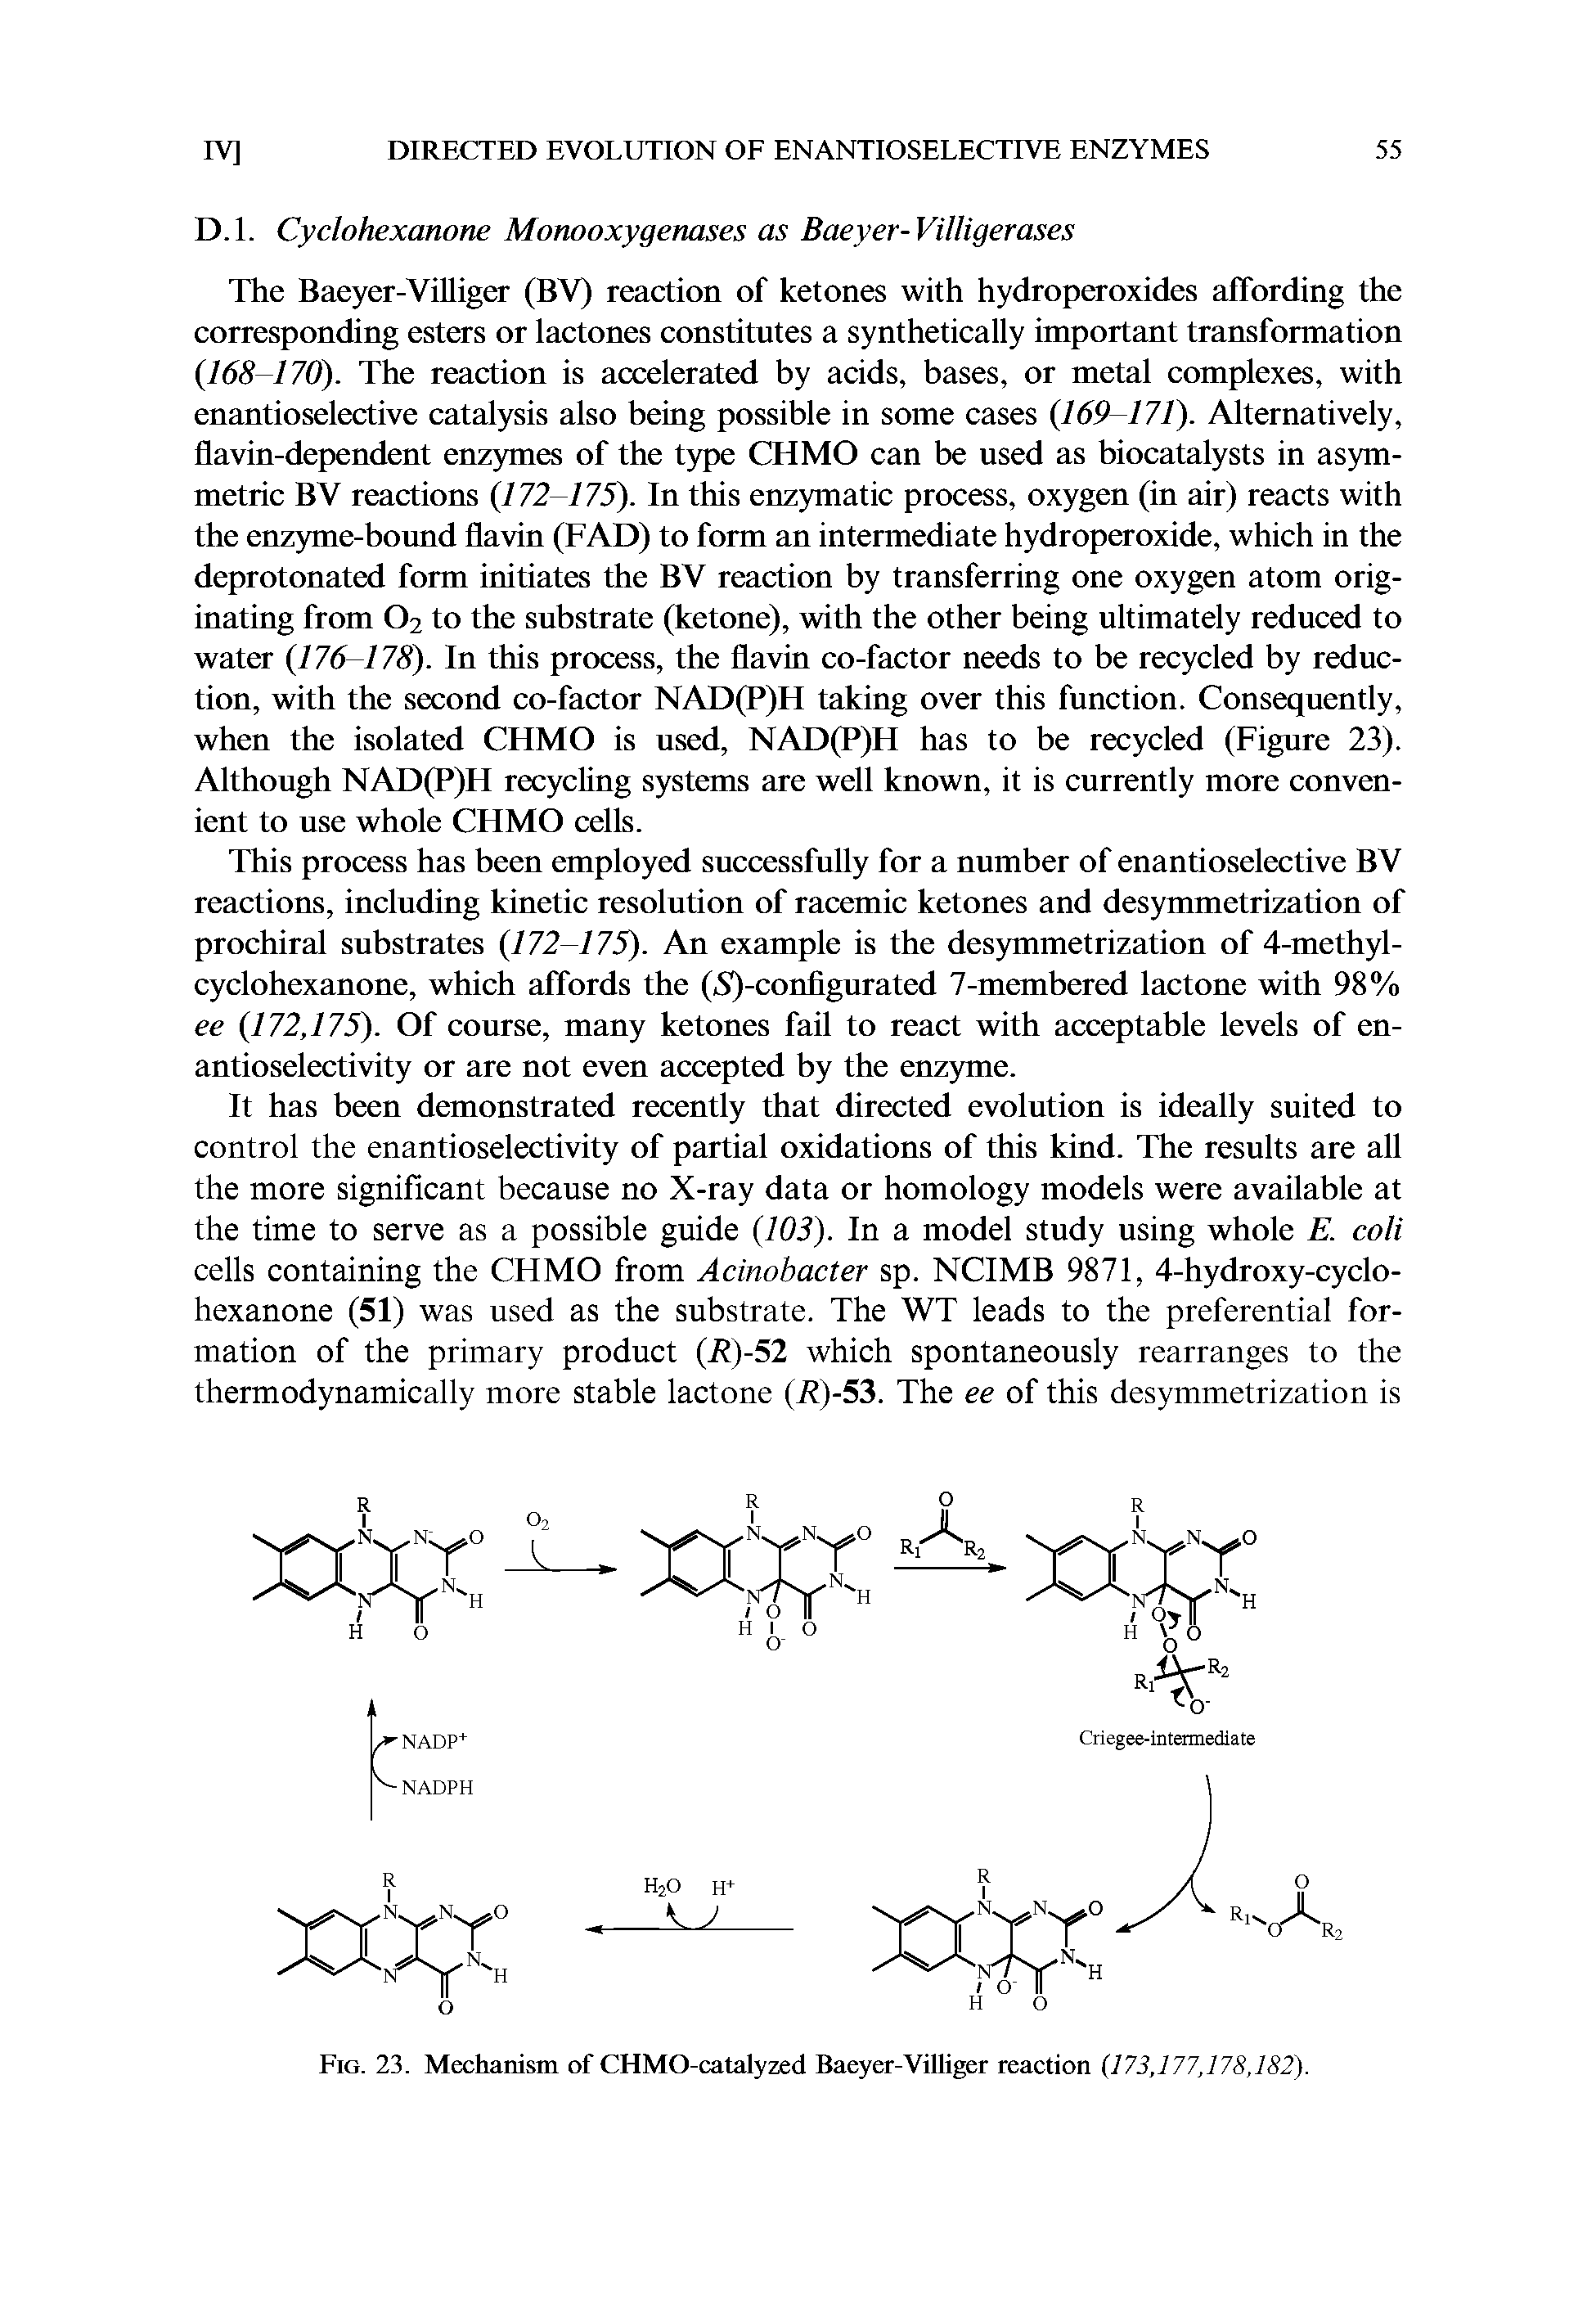 Fig. 23. Mechanism of CHMO-catalyzed Baeyer-Villiger reaction (173,177,178,182).